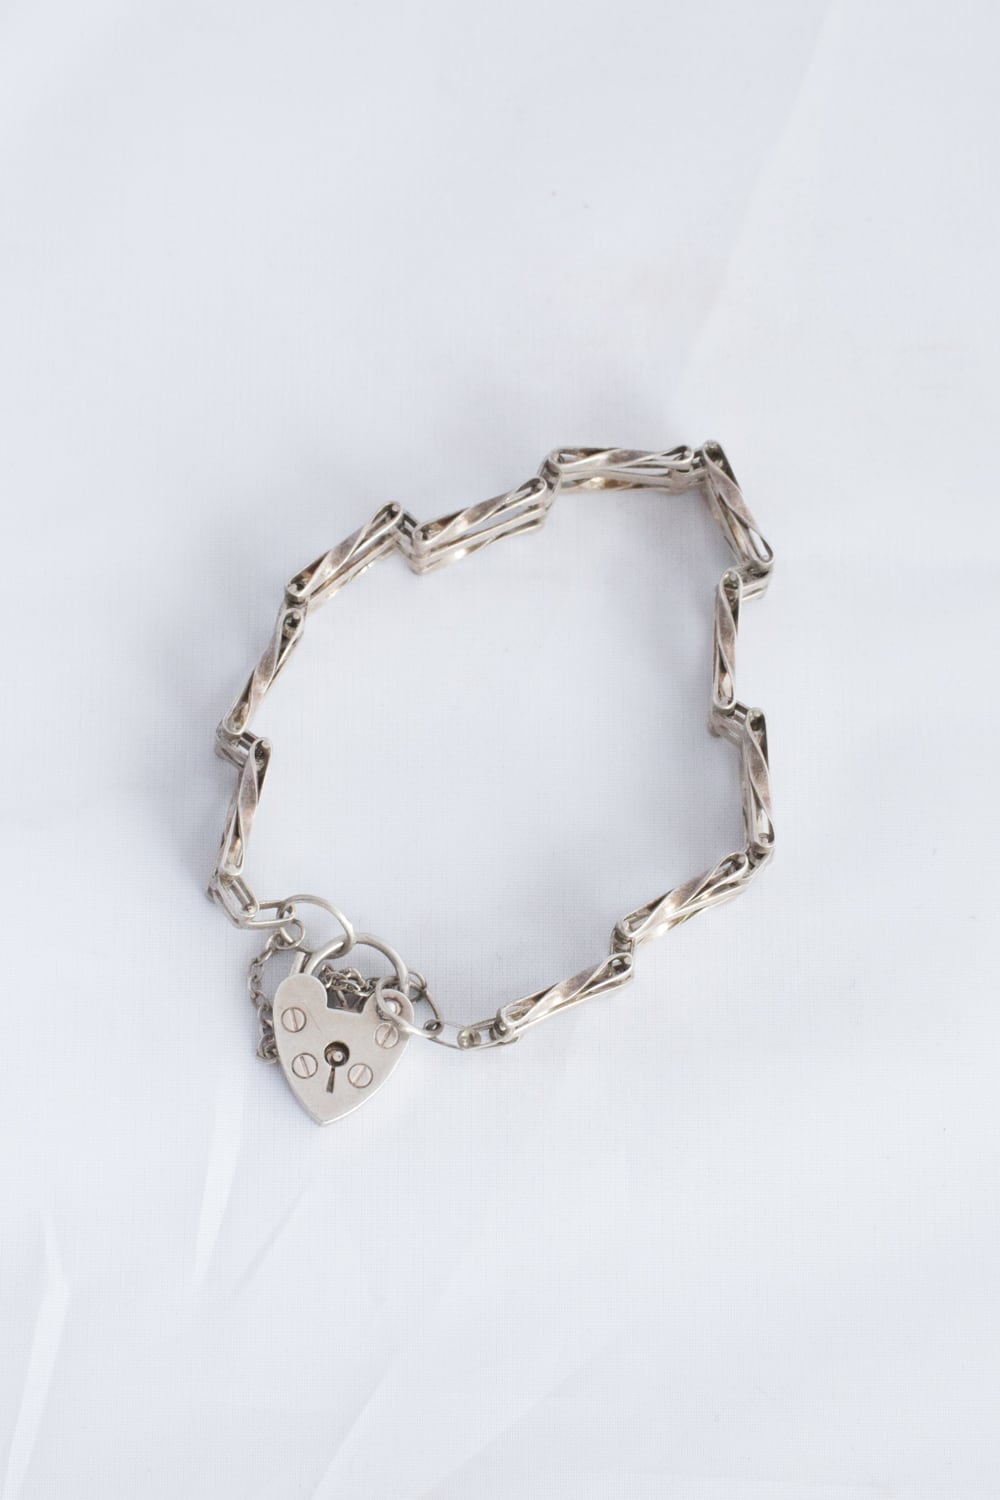 【Run Rabbit Run Vintage】Padlock bracelet silver | ACCIDENT online-shop  powered by BASE